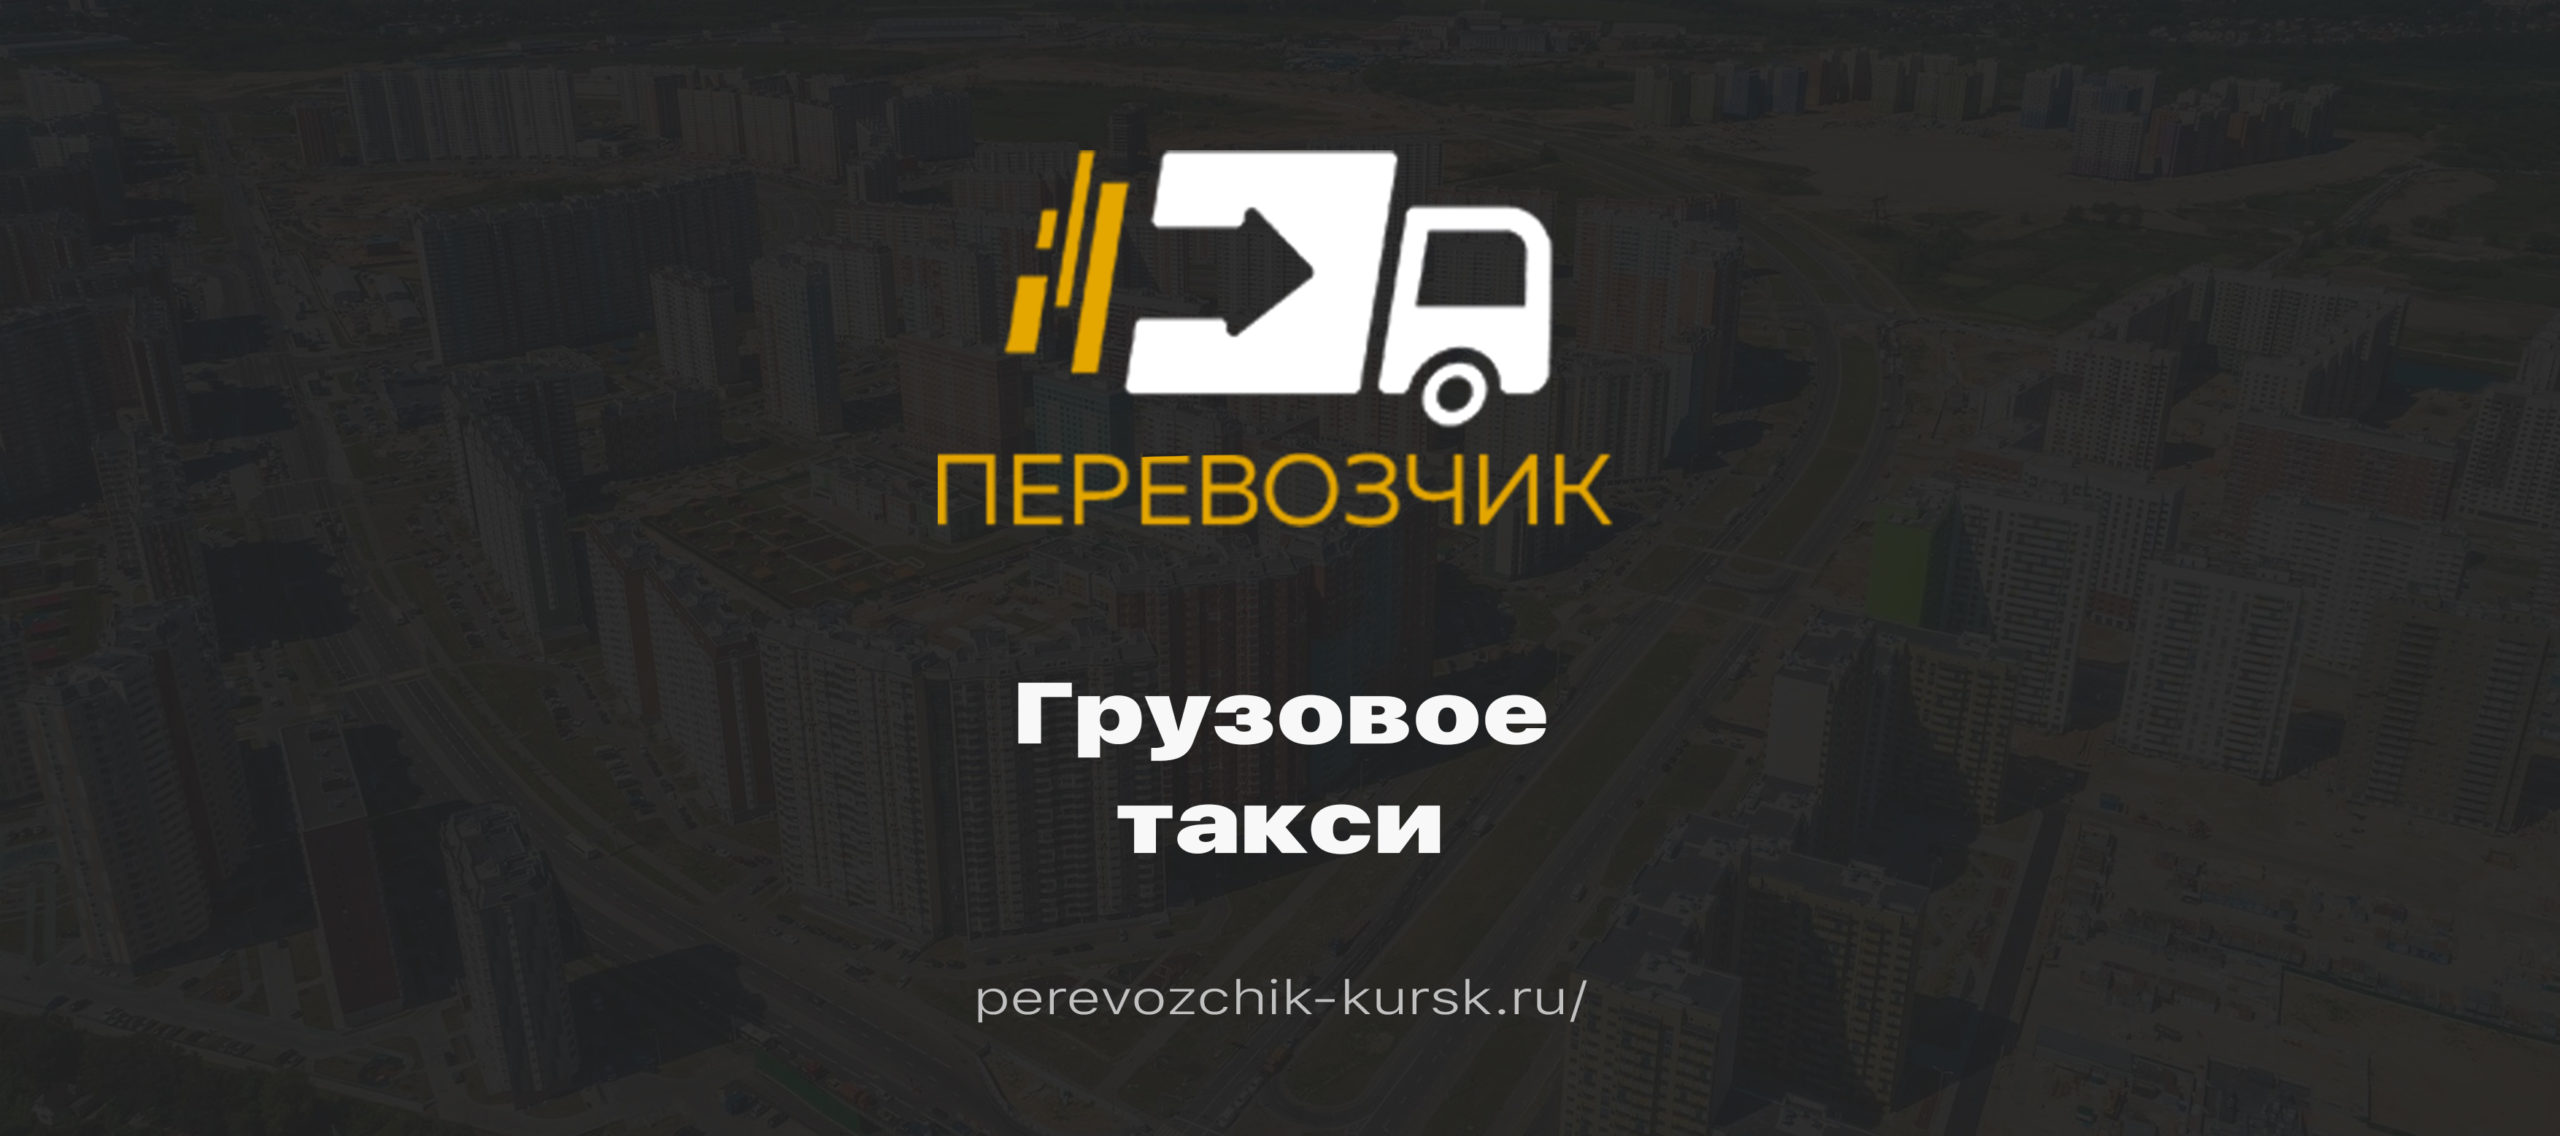 Такси Курск дешевое. Такси Курчатов. Такси Курск телефон.